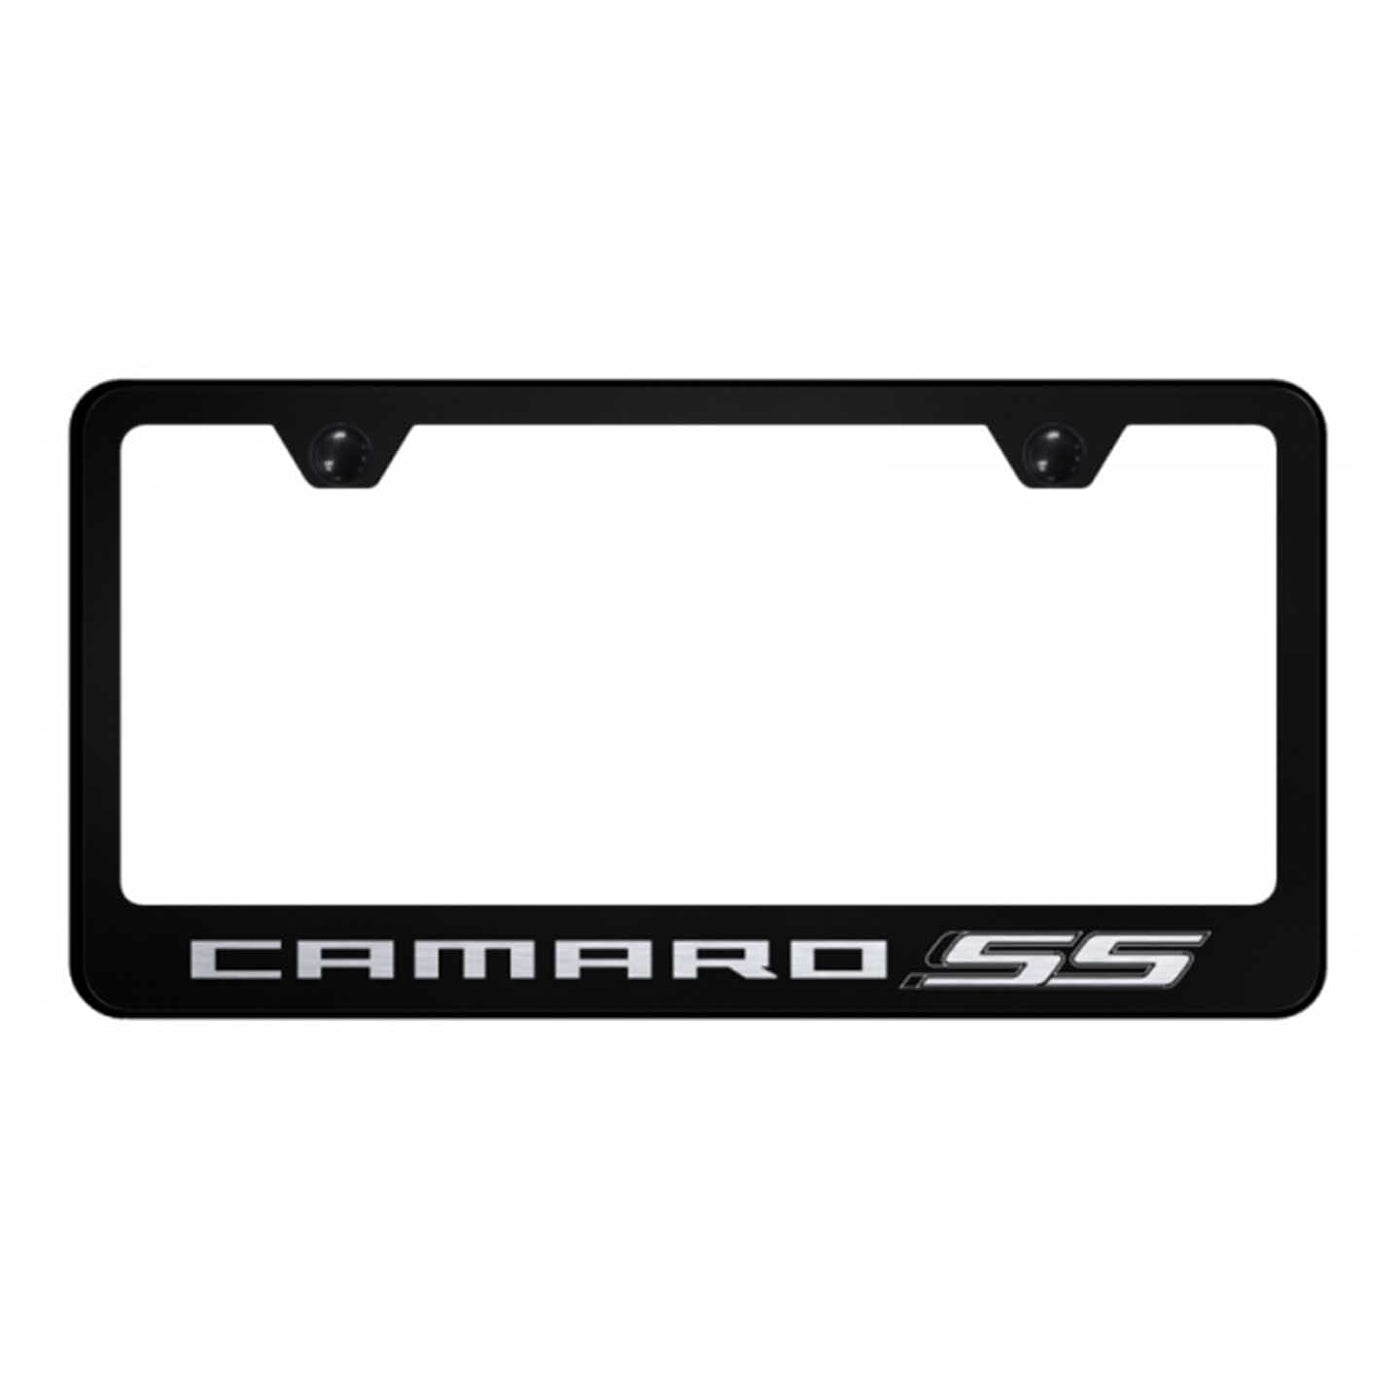 Camaro SS Stainless Steel Frame - Laser Etched Black